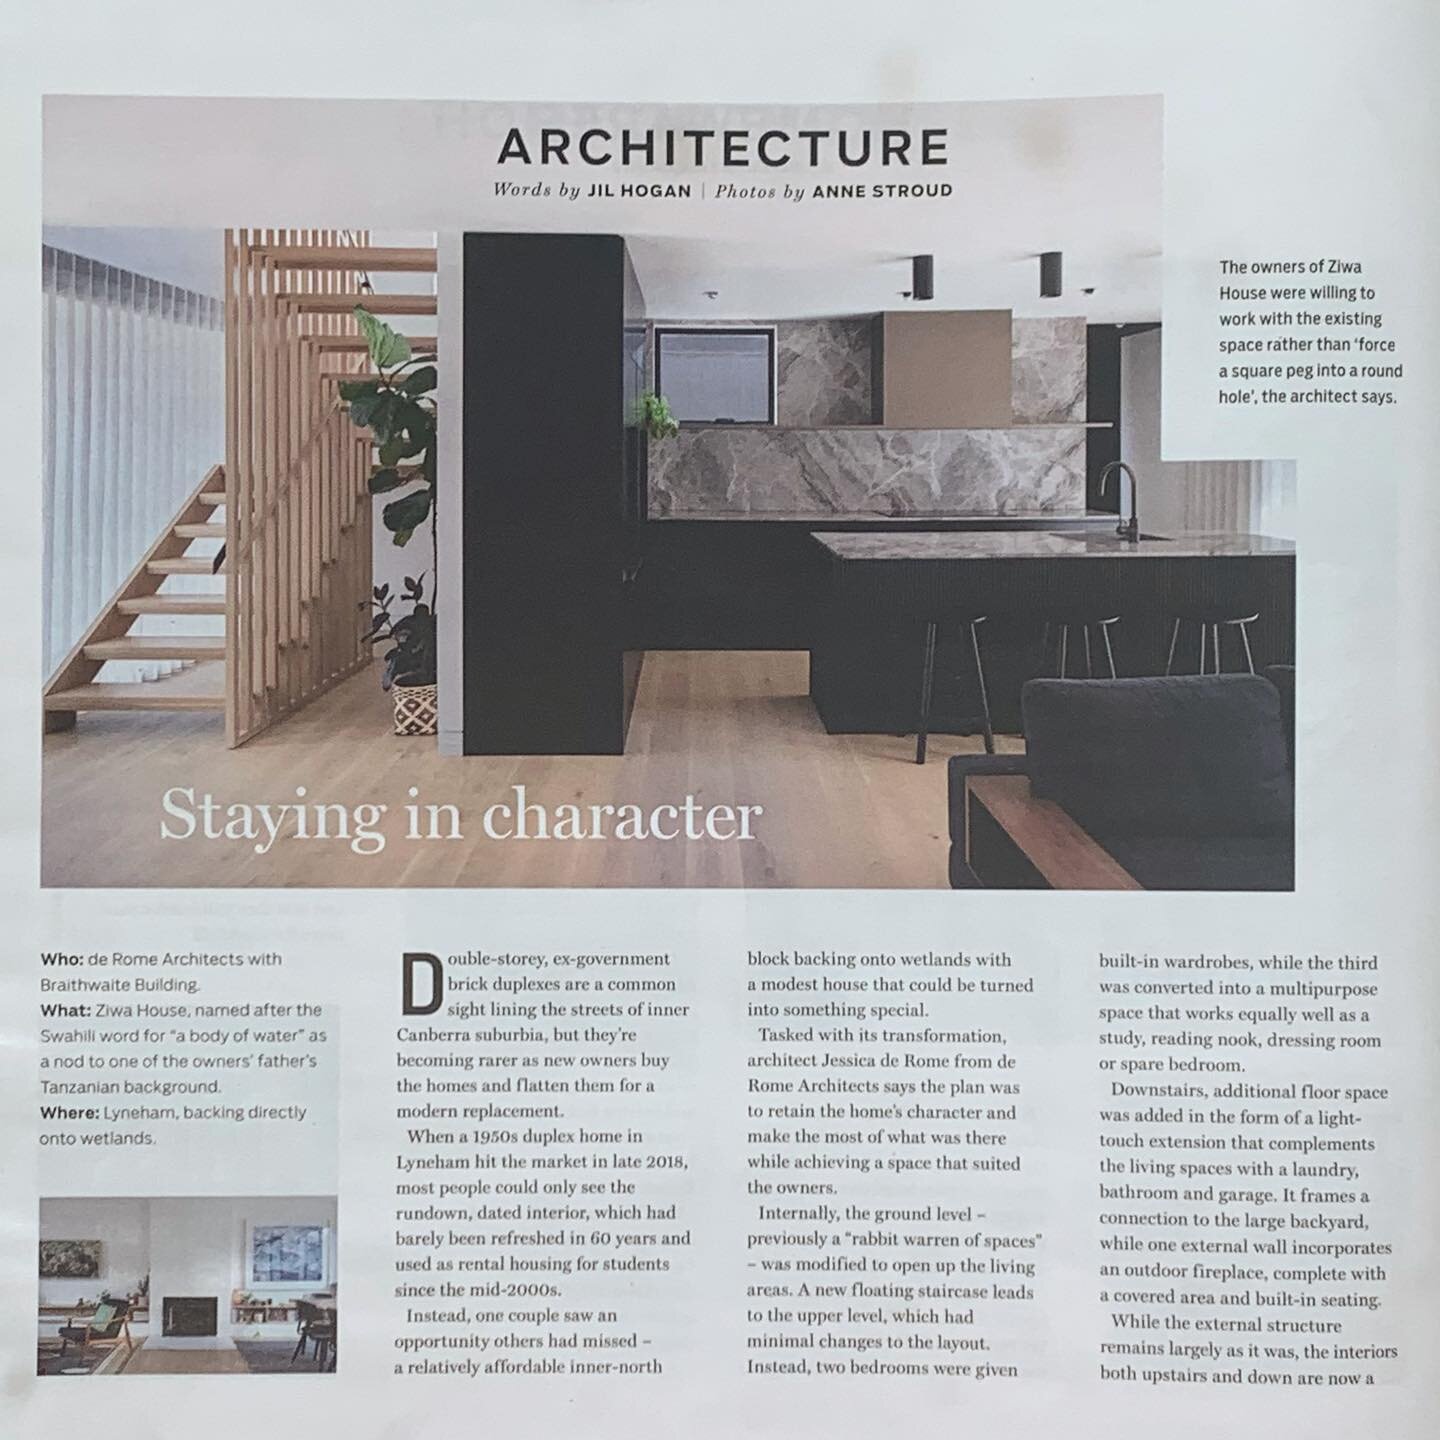 Ziwa House featured in today&rsquo;s @allhomes.com.au magazine
🏠
Architect: @de.rome.architects 
Builder: @braithwaitebuilding 
Photography: @annestroudphotography 
Article: @jilhogan 
🏠
#architecture #interiordesign #cbr #design #allhomes #canberr